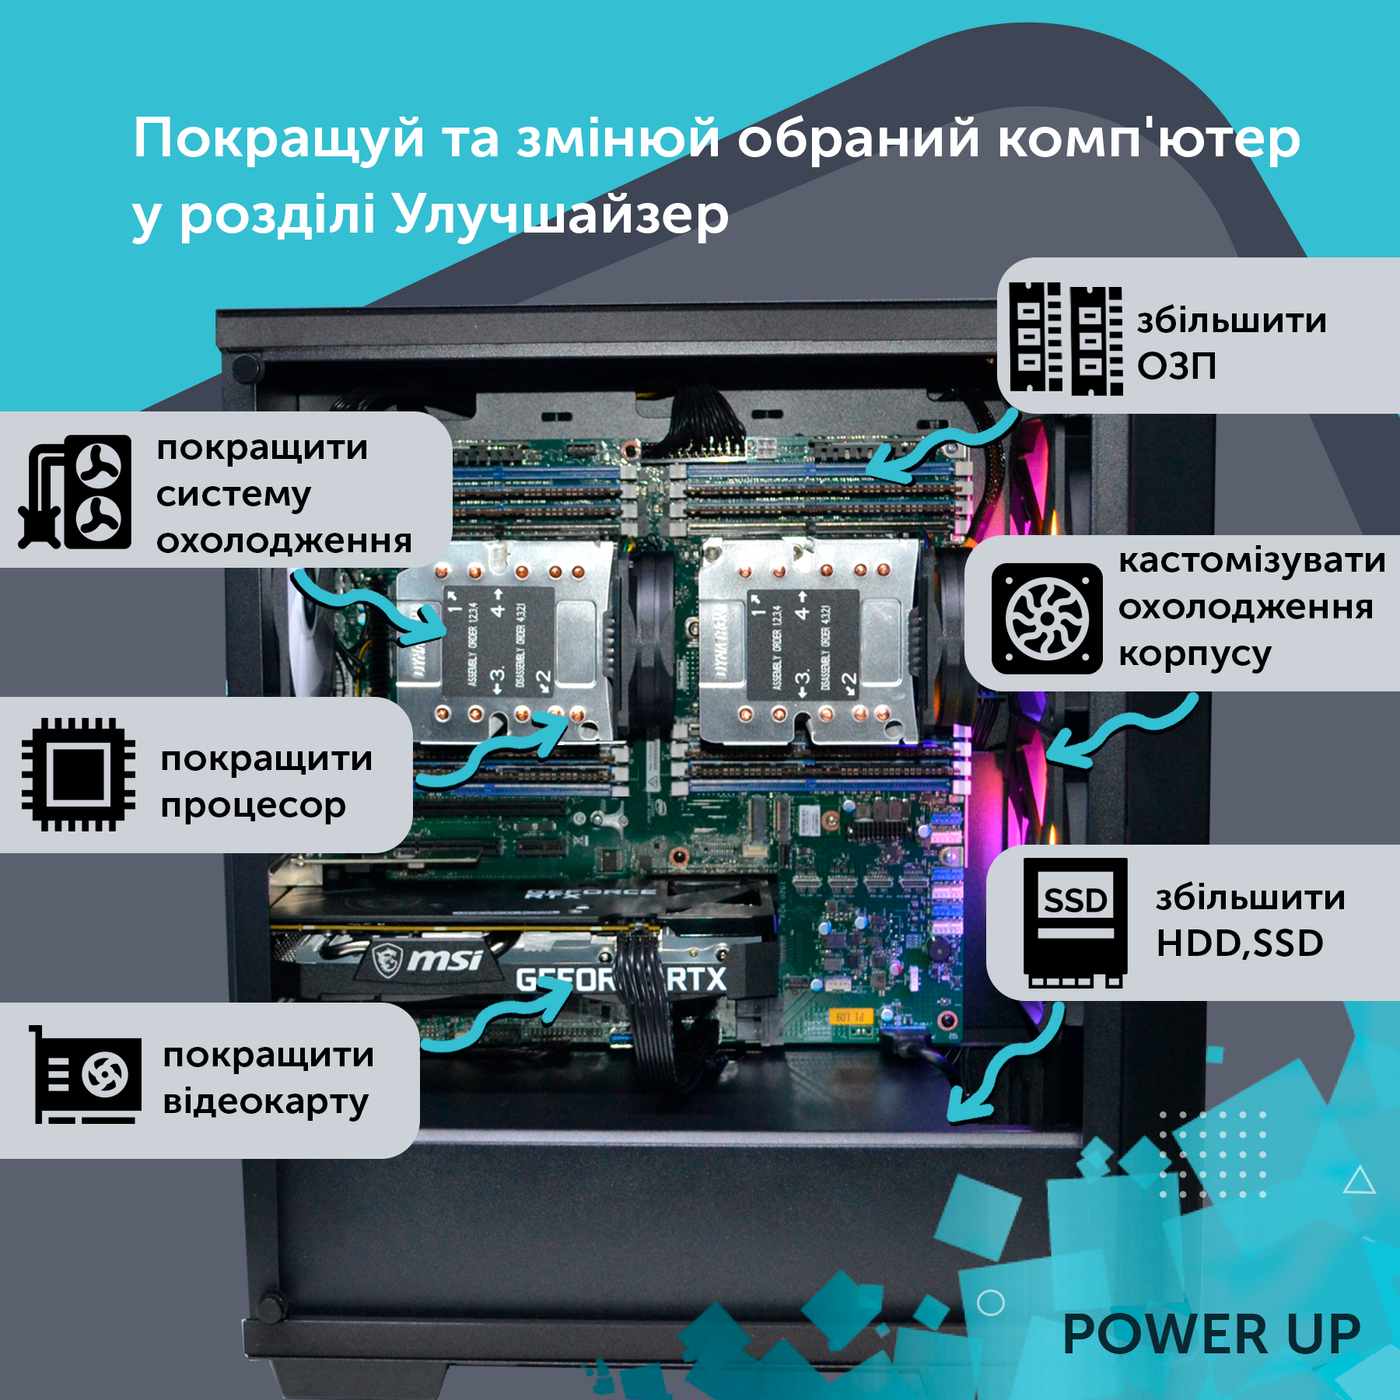 Сервер двухпроцессорный TOWER PowerUp #71 AMD EPYC 7702 x2/128 GB/SSD 512GB х2 Raid/Int Video